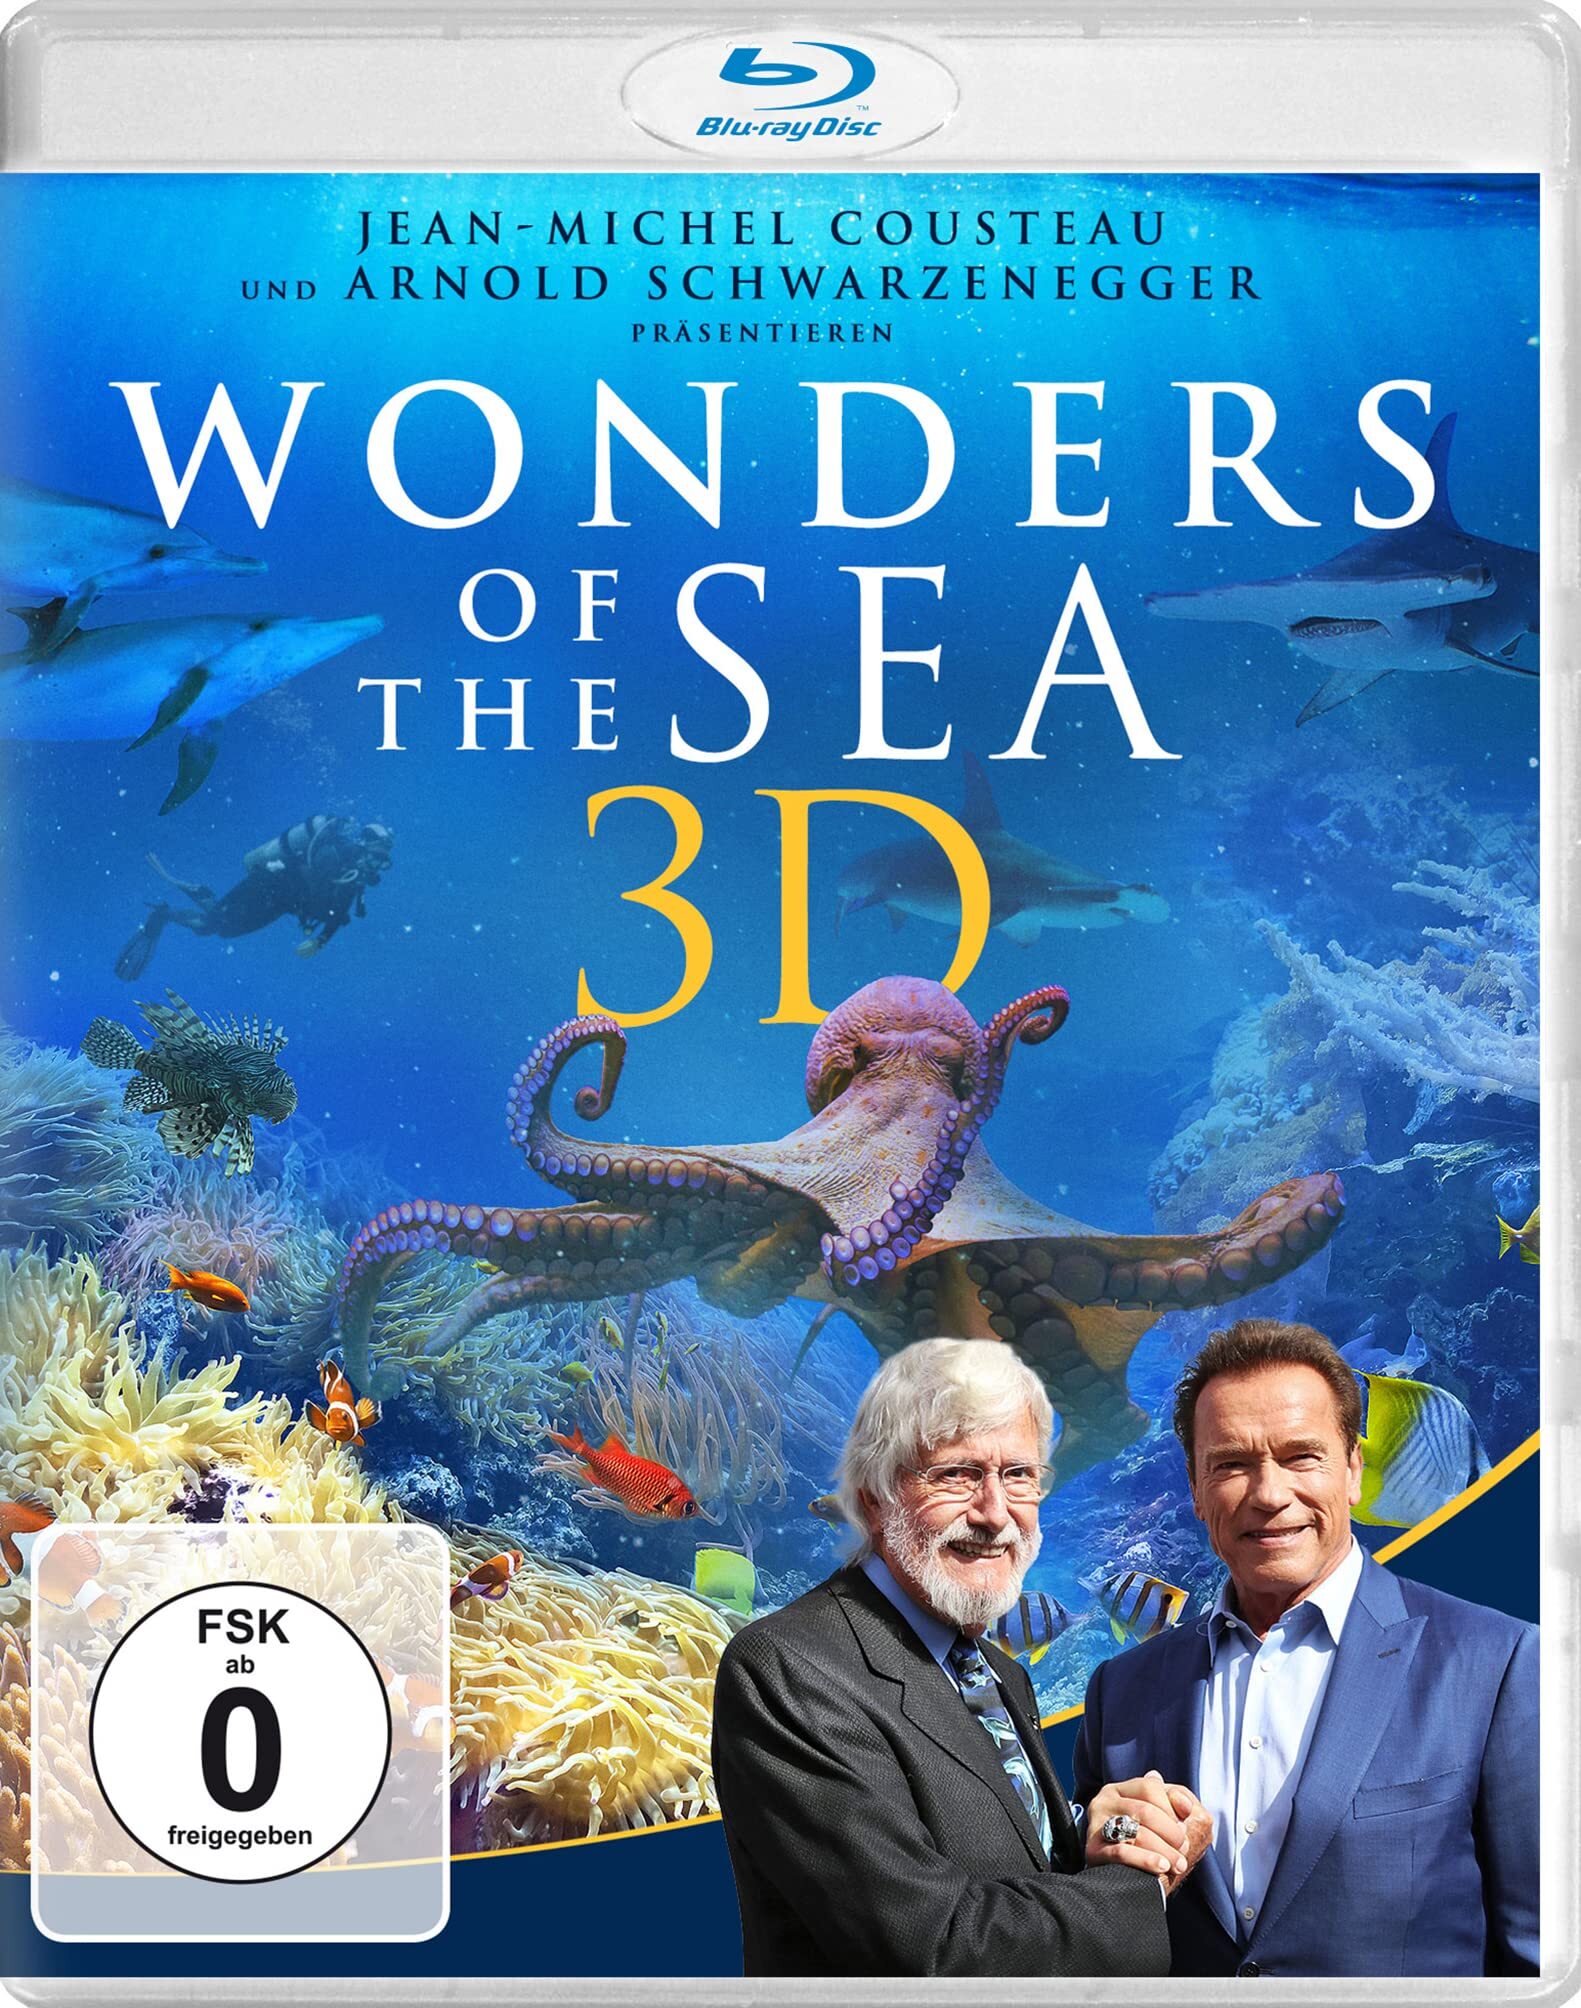 Wonders of the Sea 3D Bluray (2017) [Region B Locked] Page 2 Blu